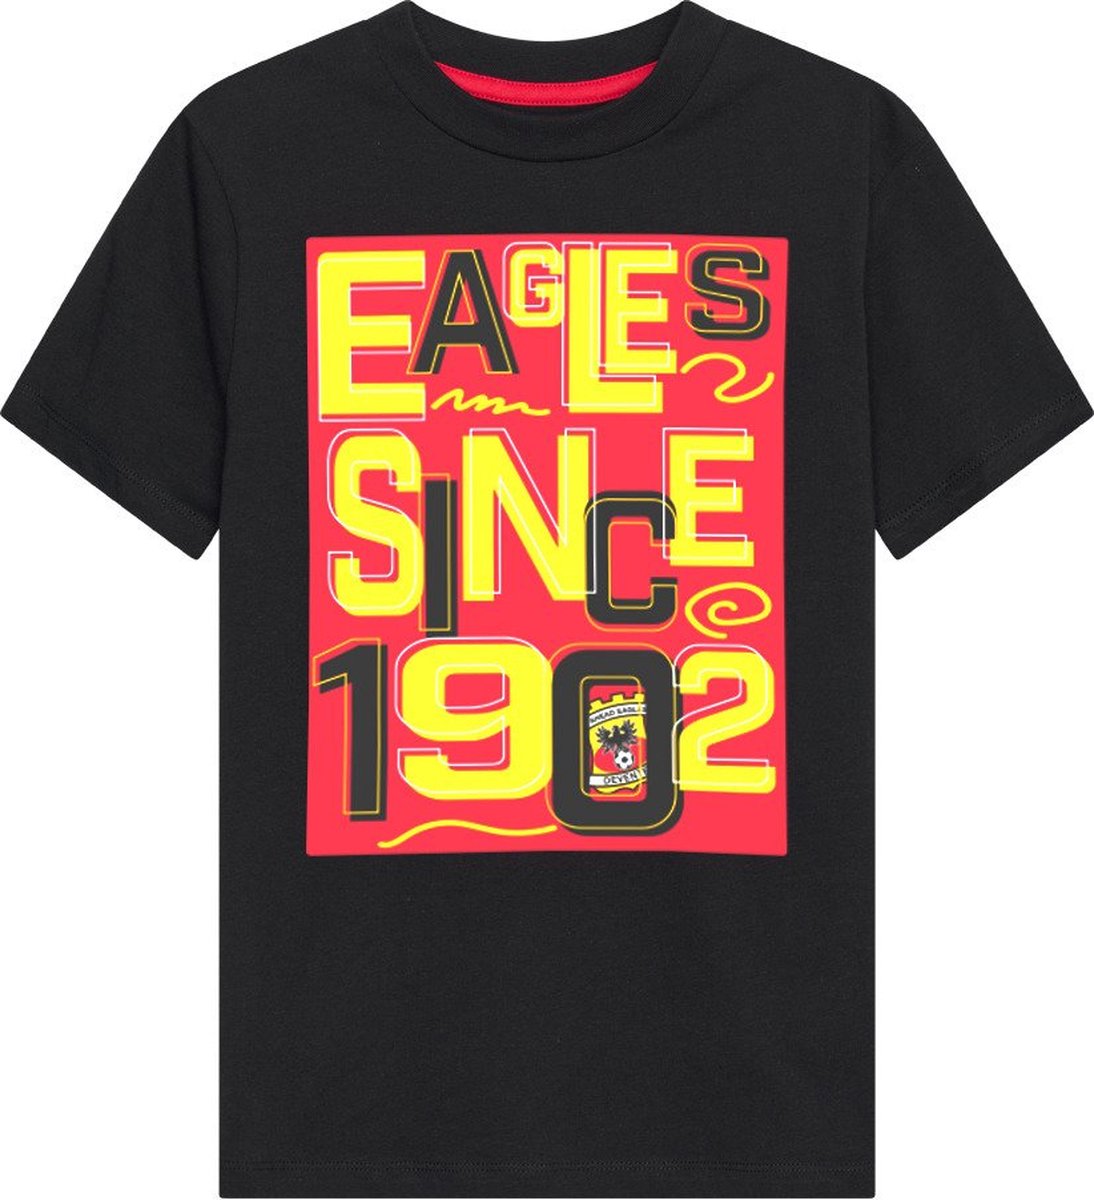 Eagles kids T-shirt - Voetbalshirts kinderen - Go Ahead Eagles - maat 128